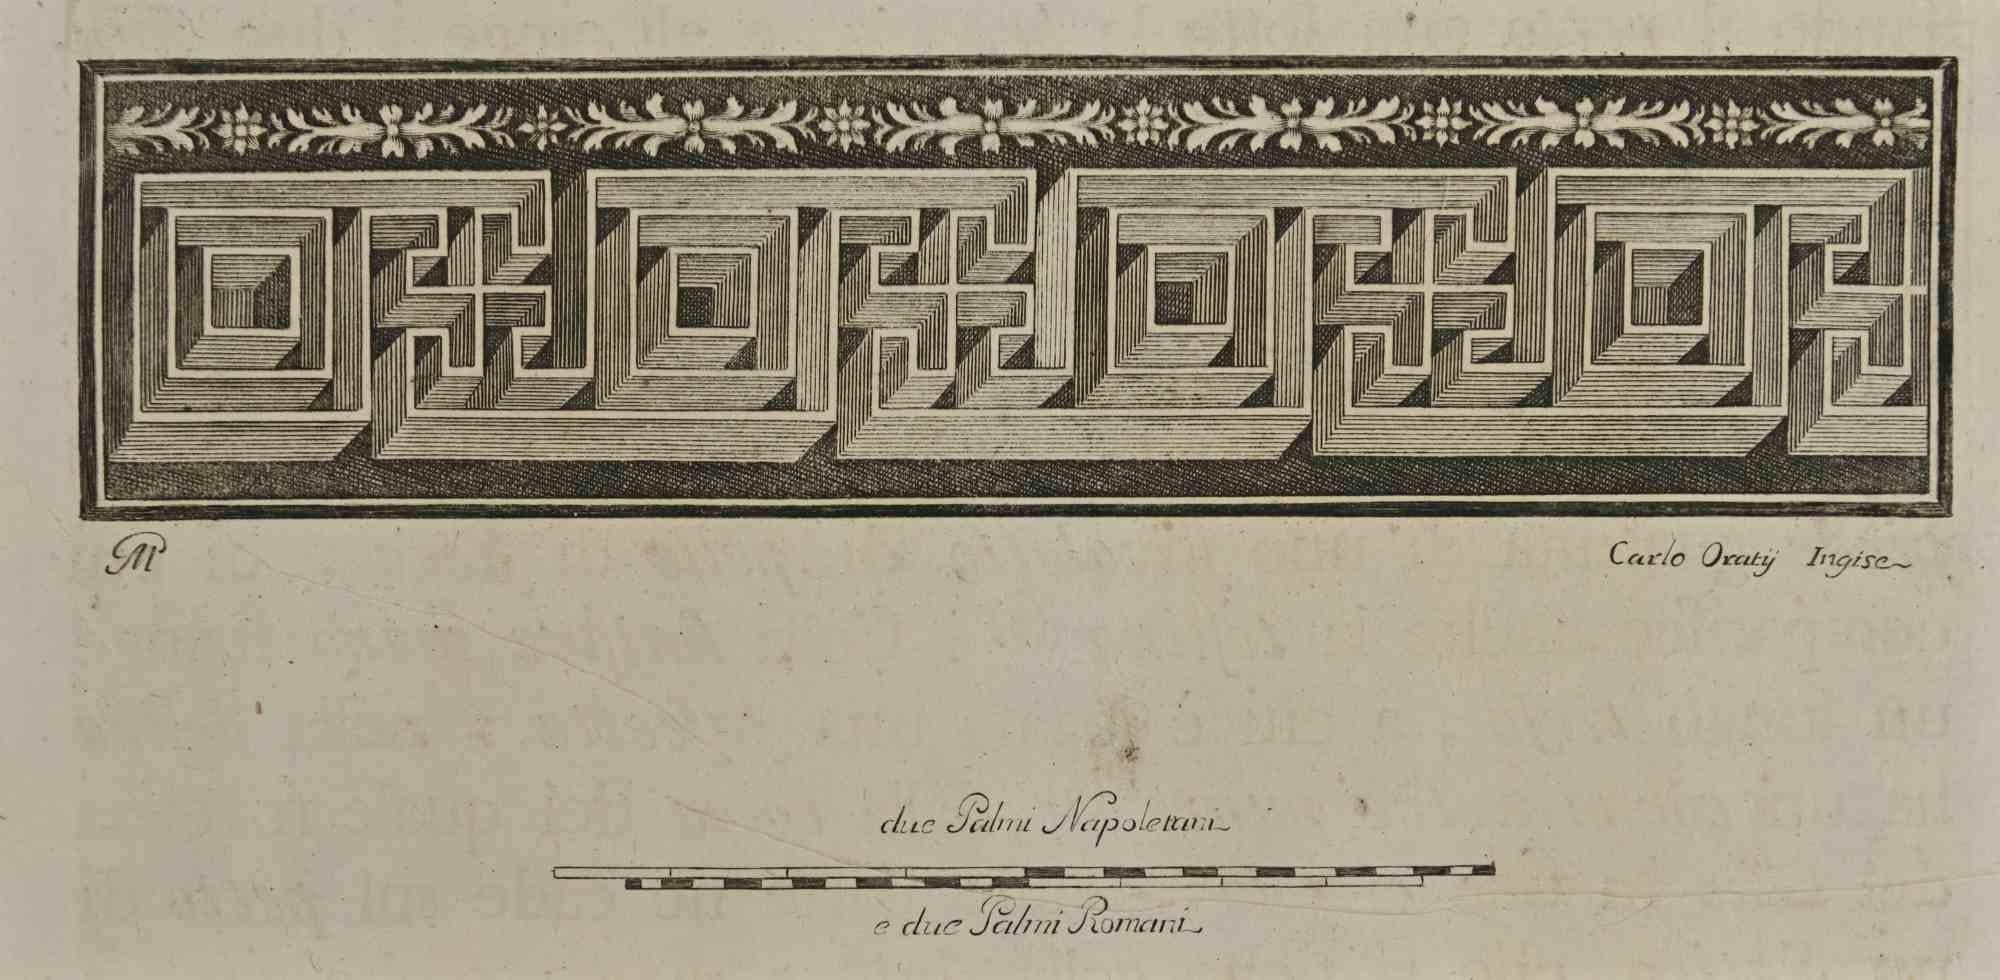 Carlo Oratij Figurative Print - Ancient Roman Labyrinth  - Etching - 18th Century